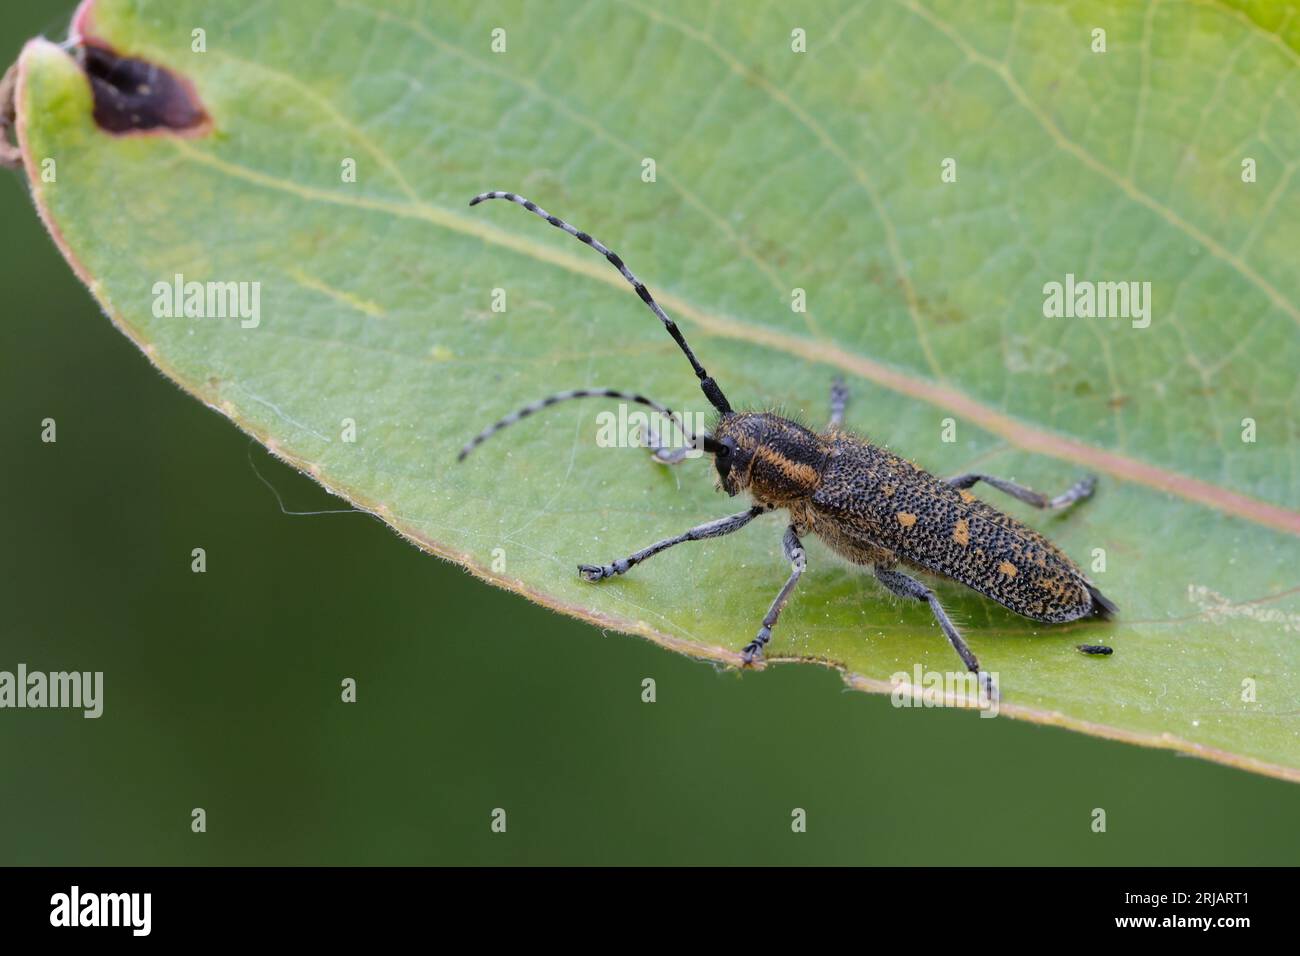 Kleiner Pappelbock, Espenbock, Kleiner Aspenbock, Saperda populnea, Small poplar longhorn beetle, Small poplar borer Stock Photo